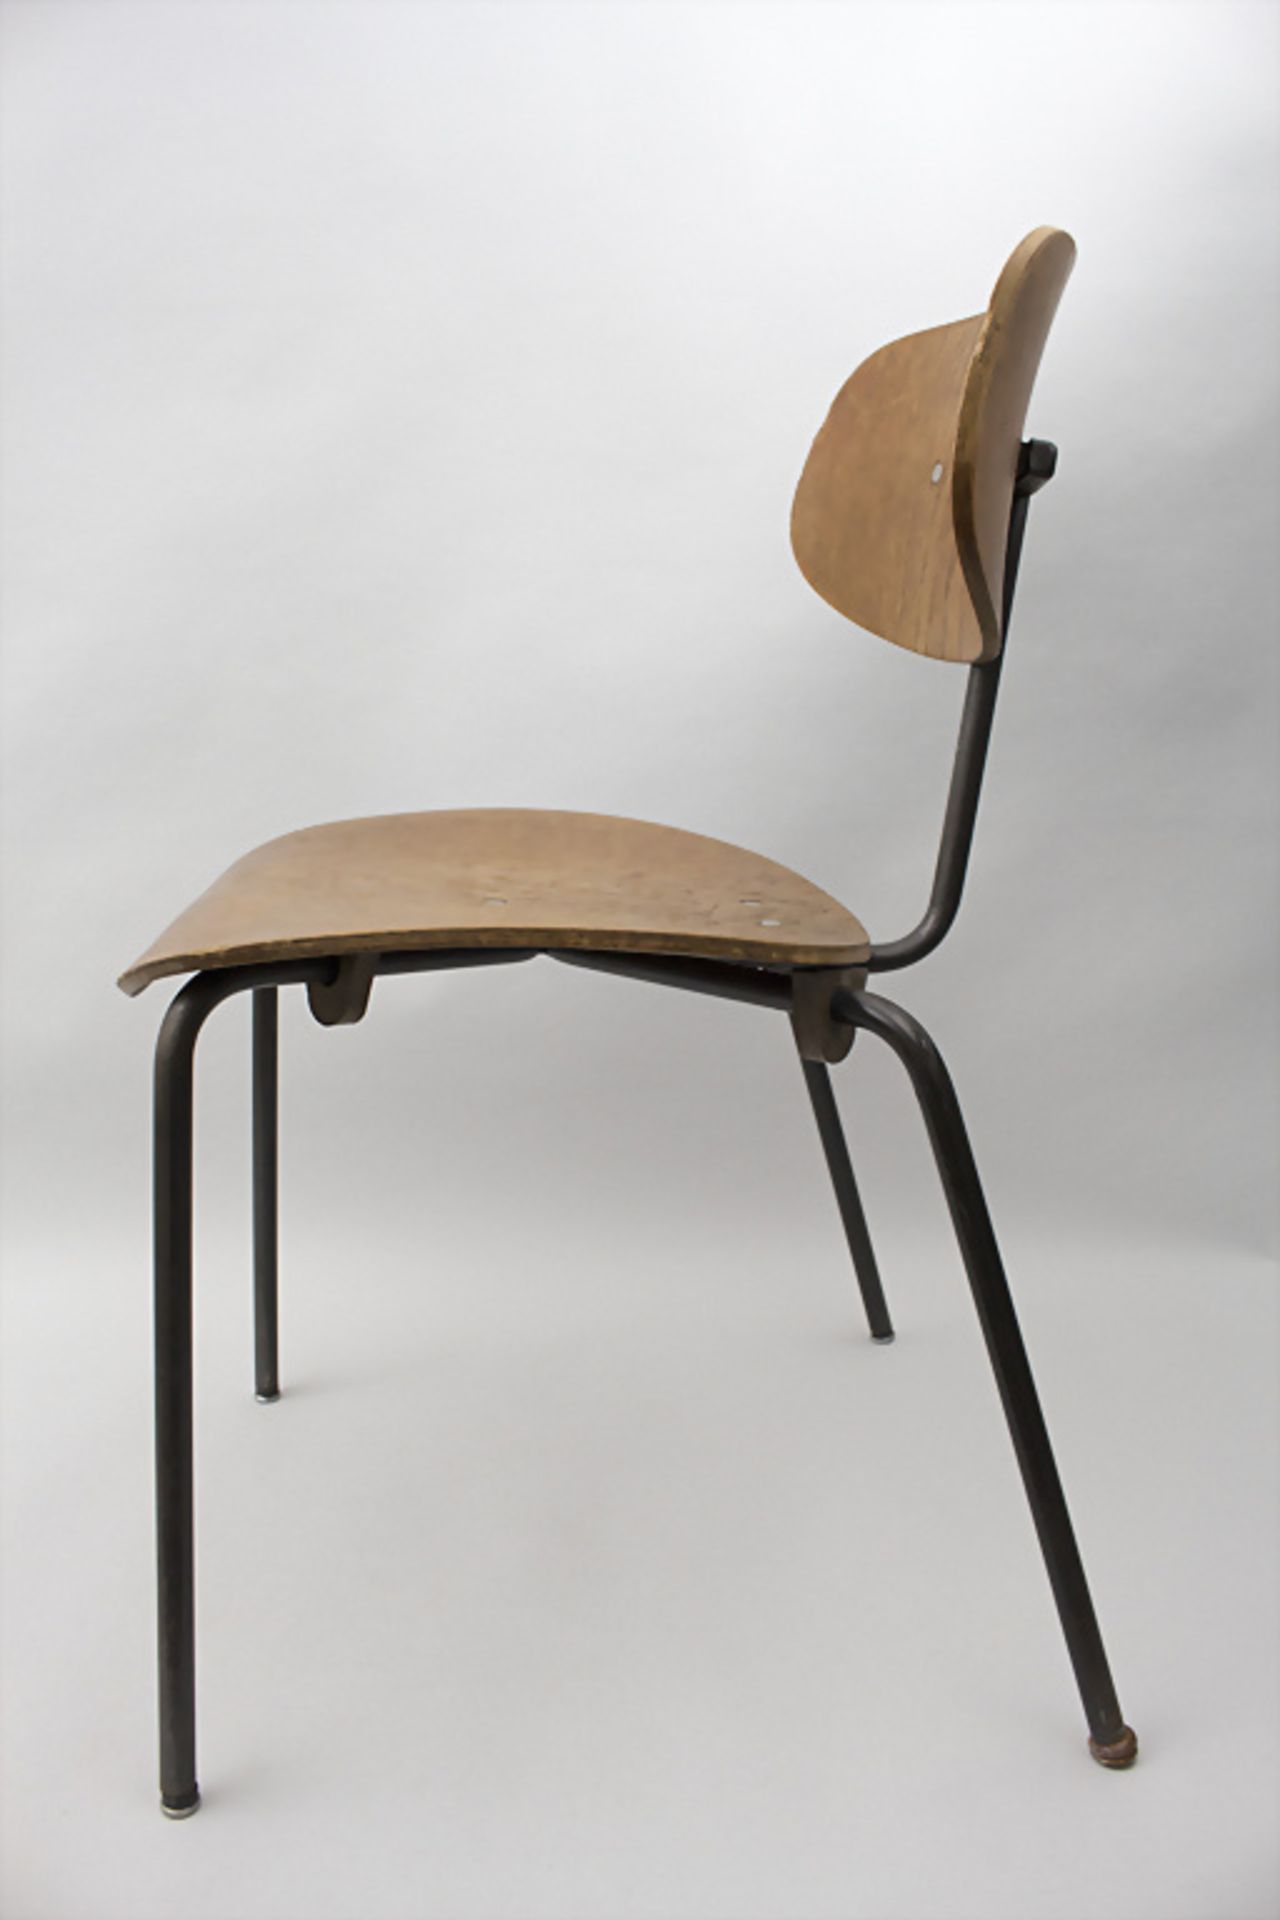 Stuhl / A chair, nach Entwurf Egon Eiermann, um 1950 - Image 3 of 5